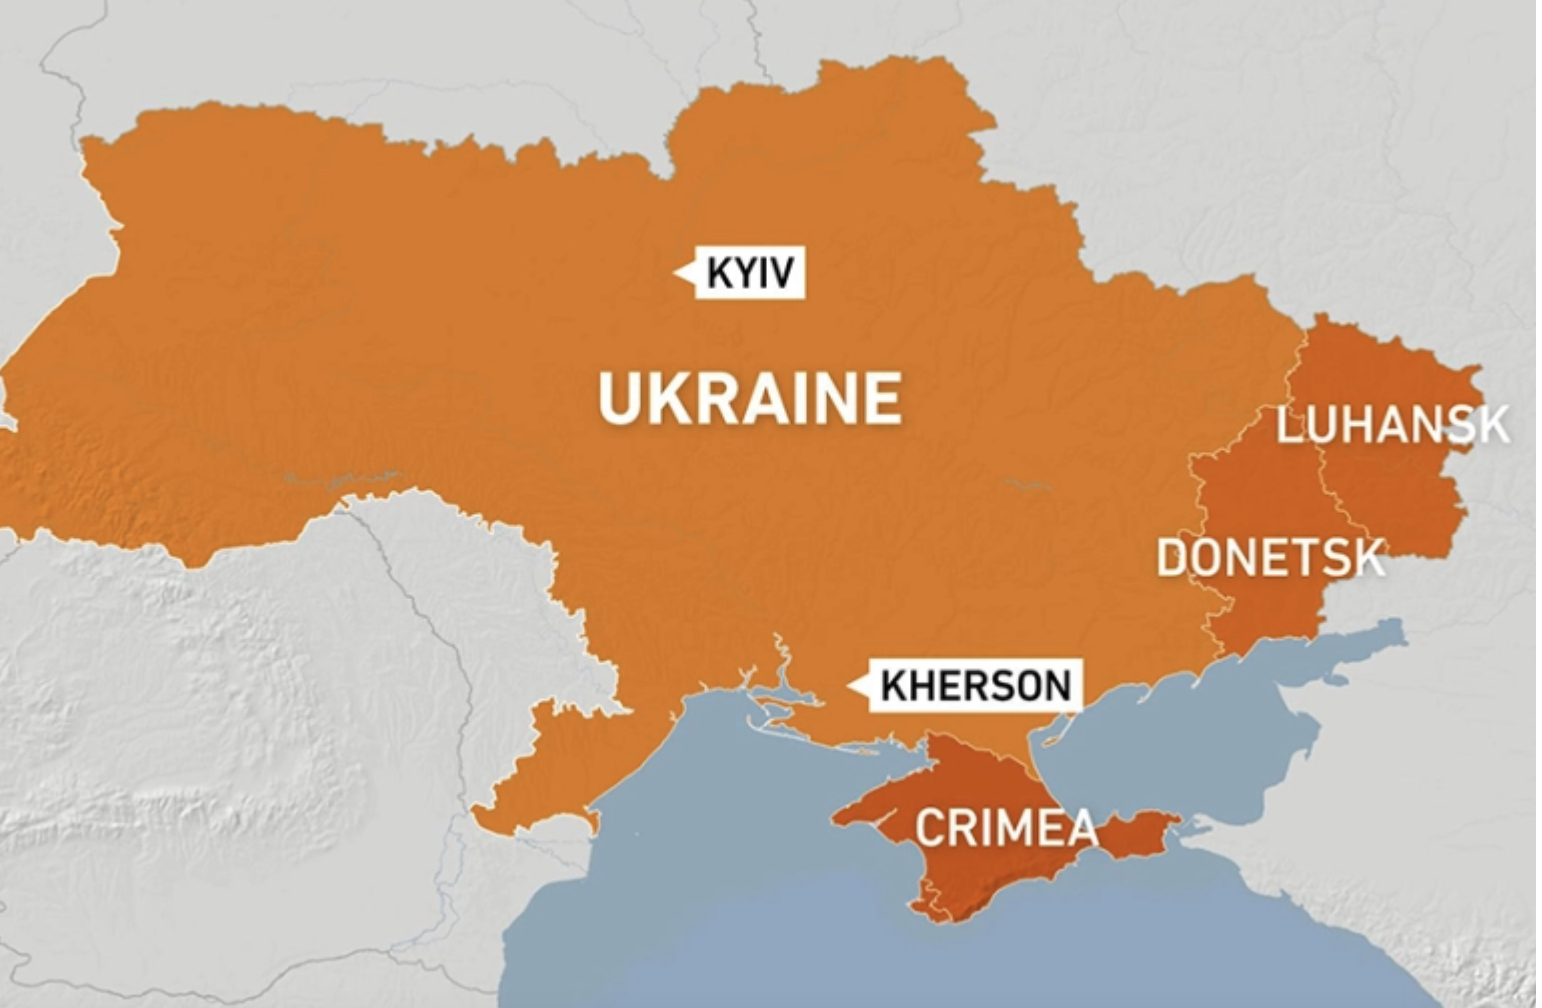 Vùng Kherson thuộc miền nam Ukraine, nằm giáp Crimea. Ảnh: Al Jazzeera